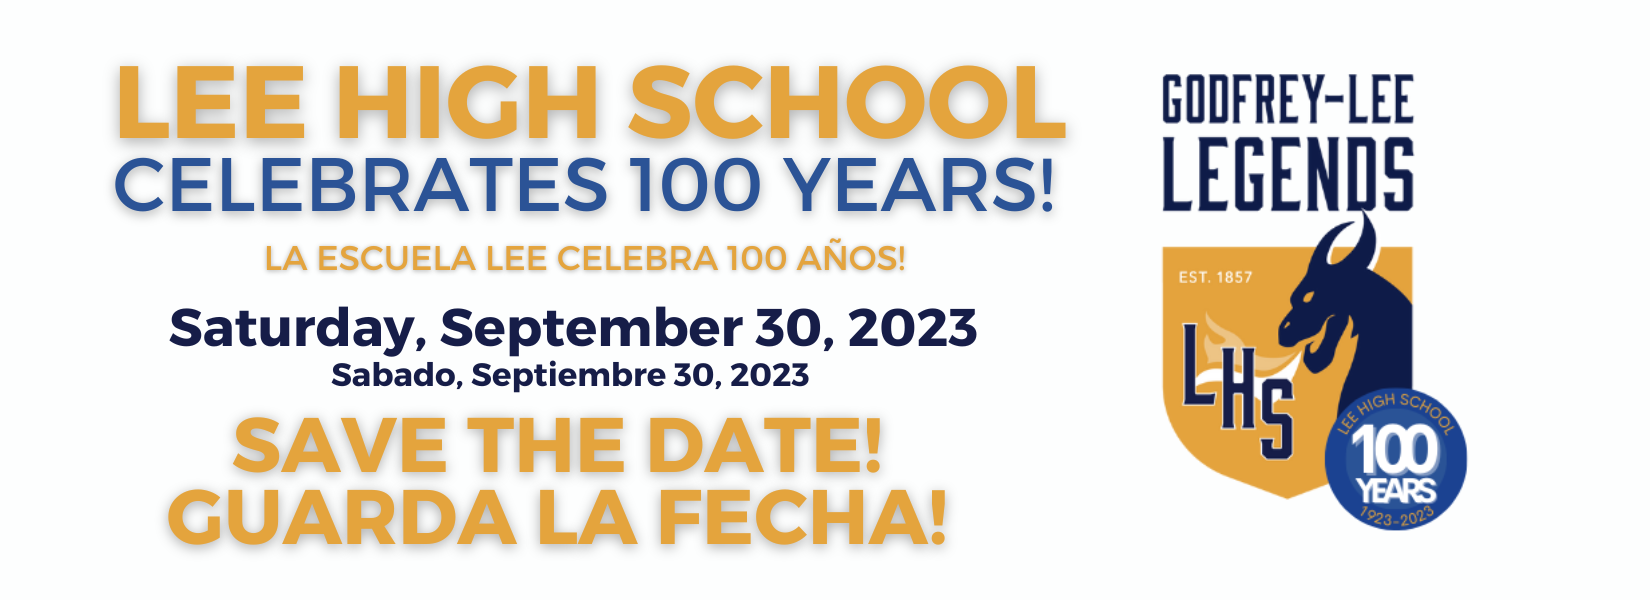 Lee High Celebrates 100 years on September 30, 2023!